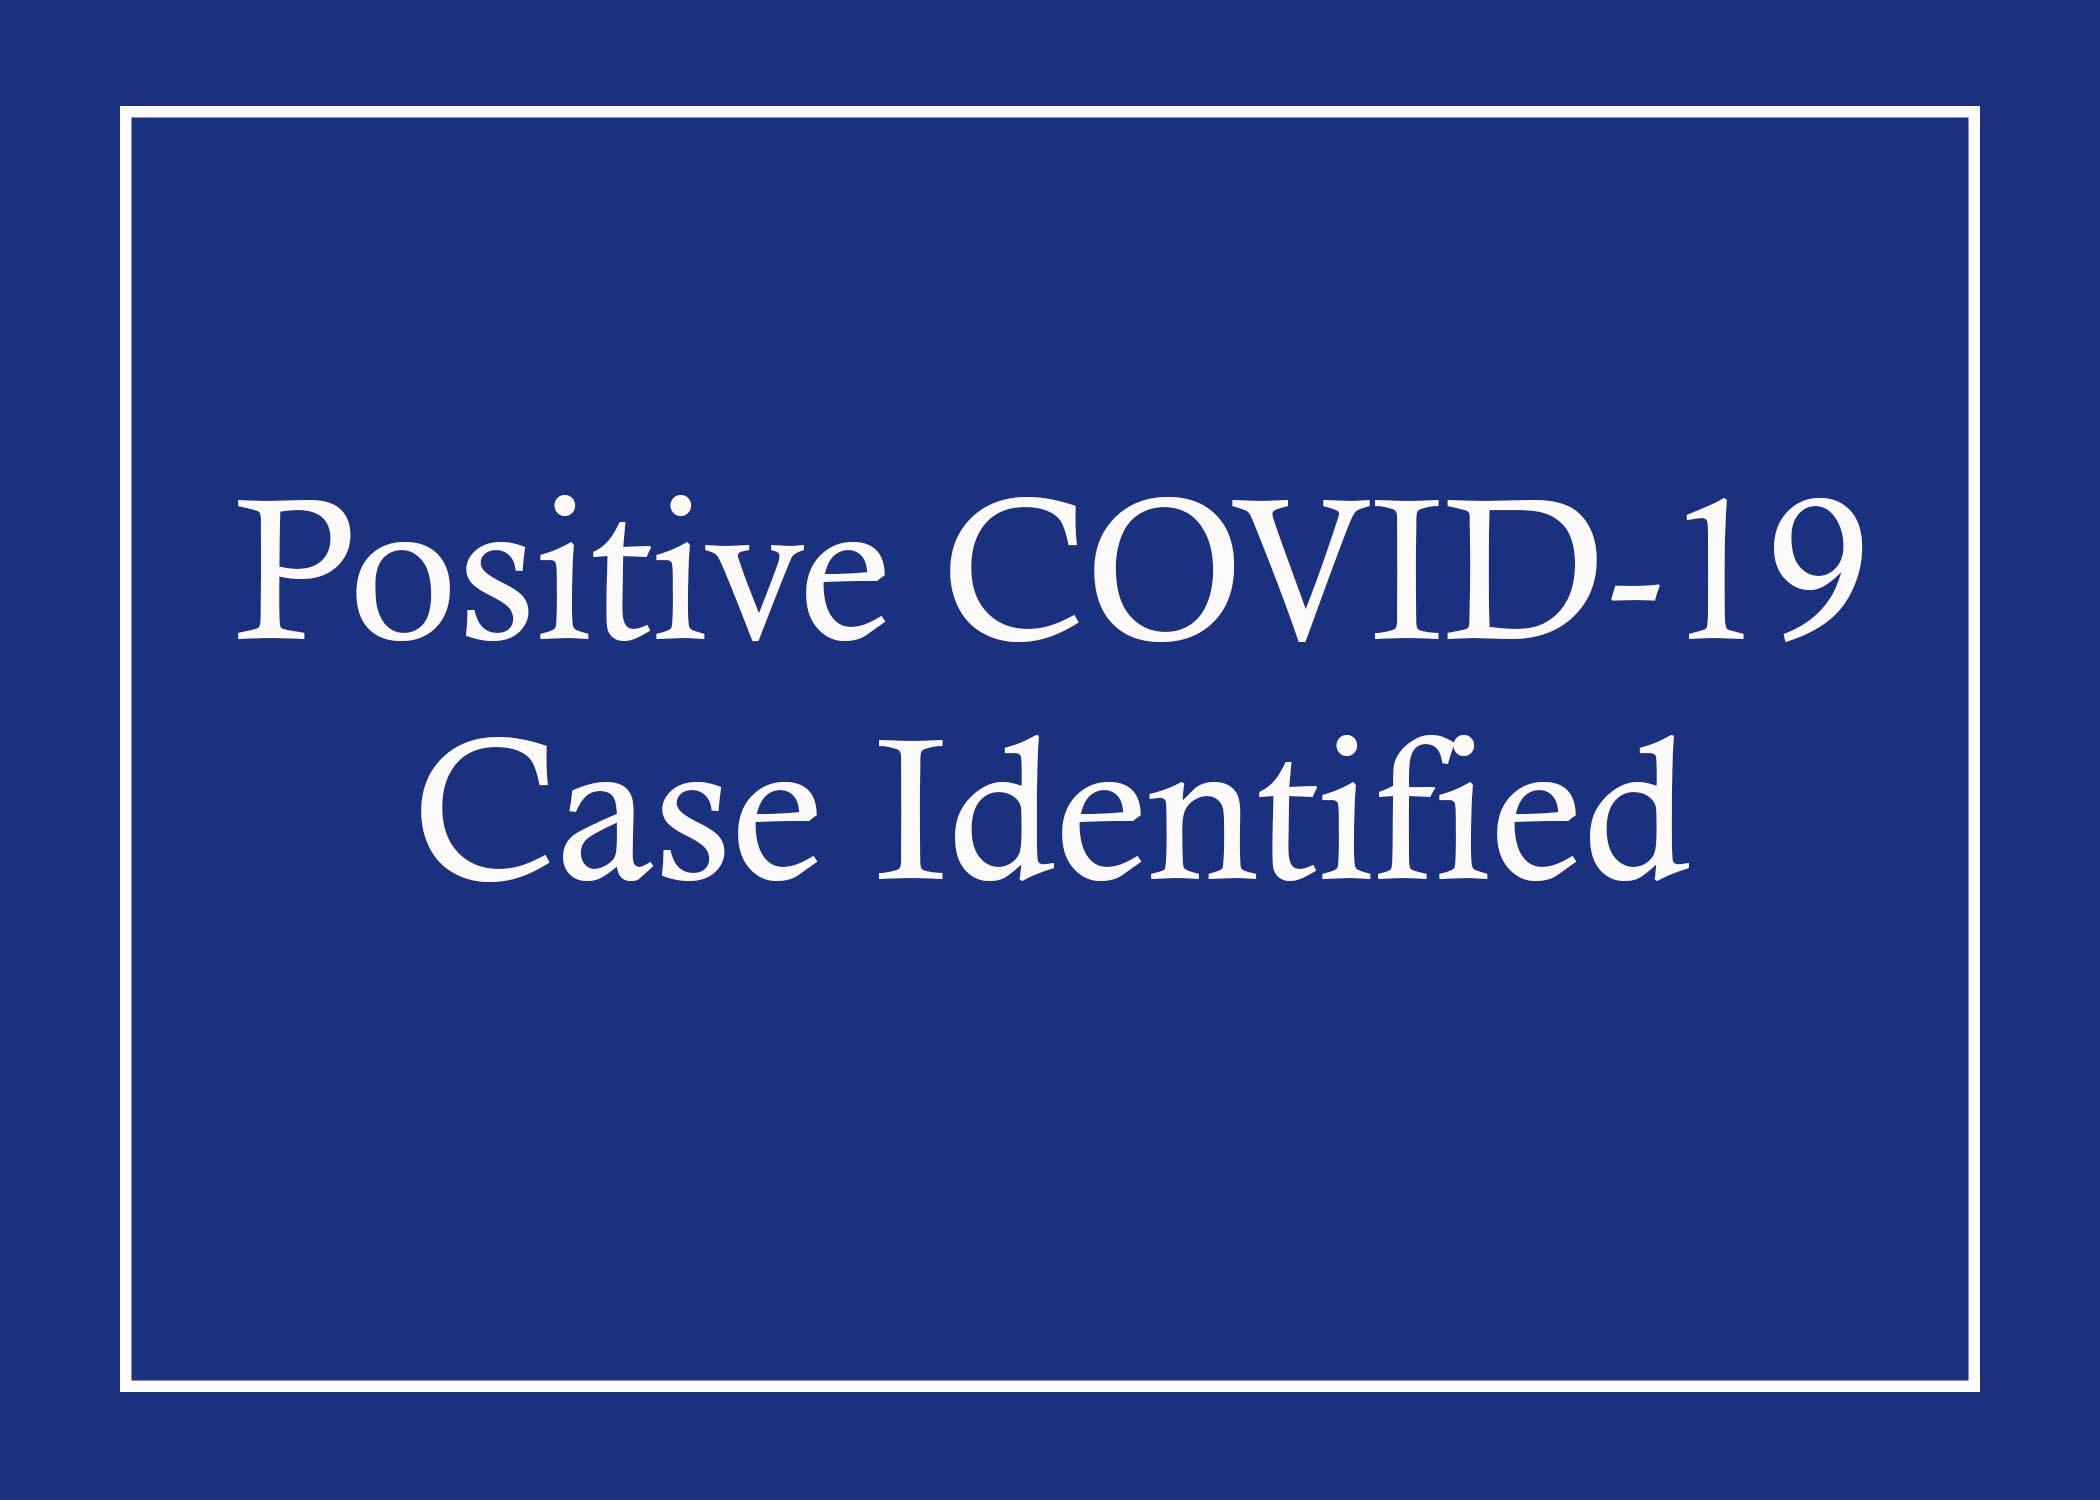 Confirmed COVID-19 Case at Topeka Correctional Facility